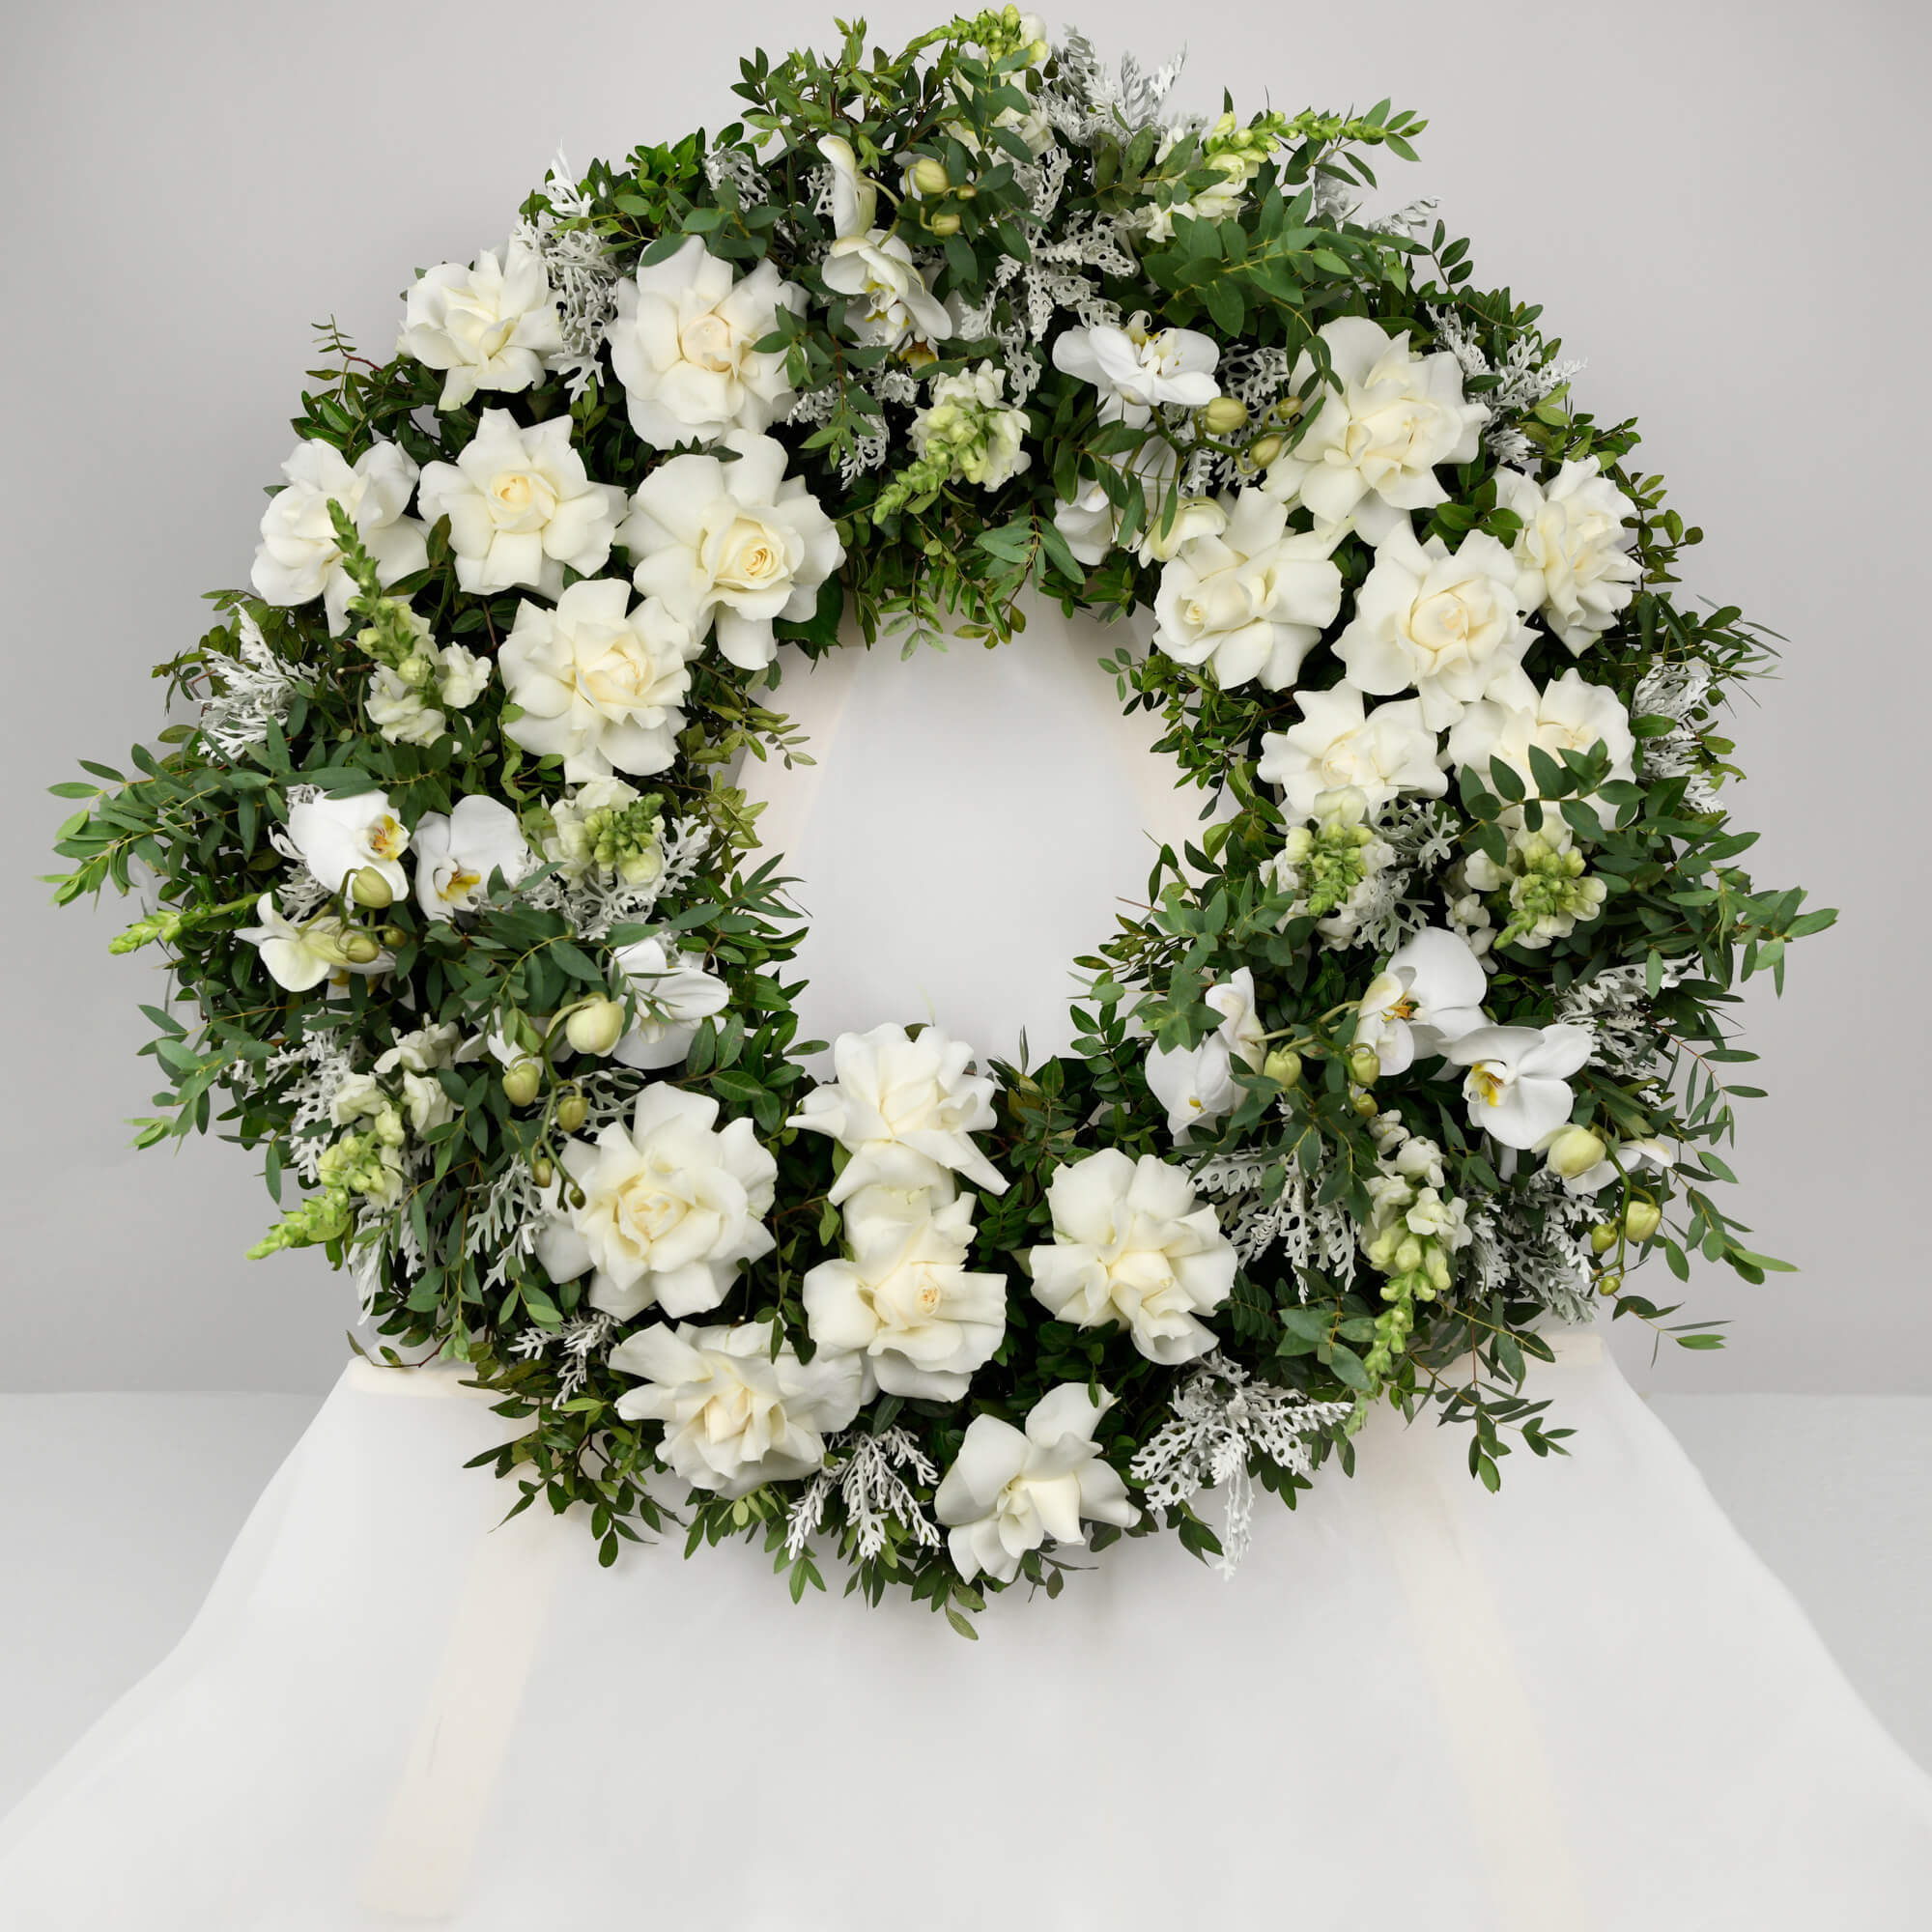 Coroana funerara cu trandafiri albi speciali si phalaenopsis